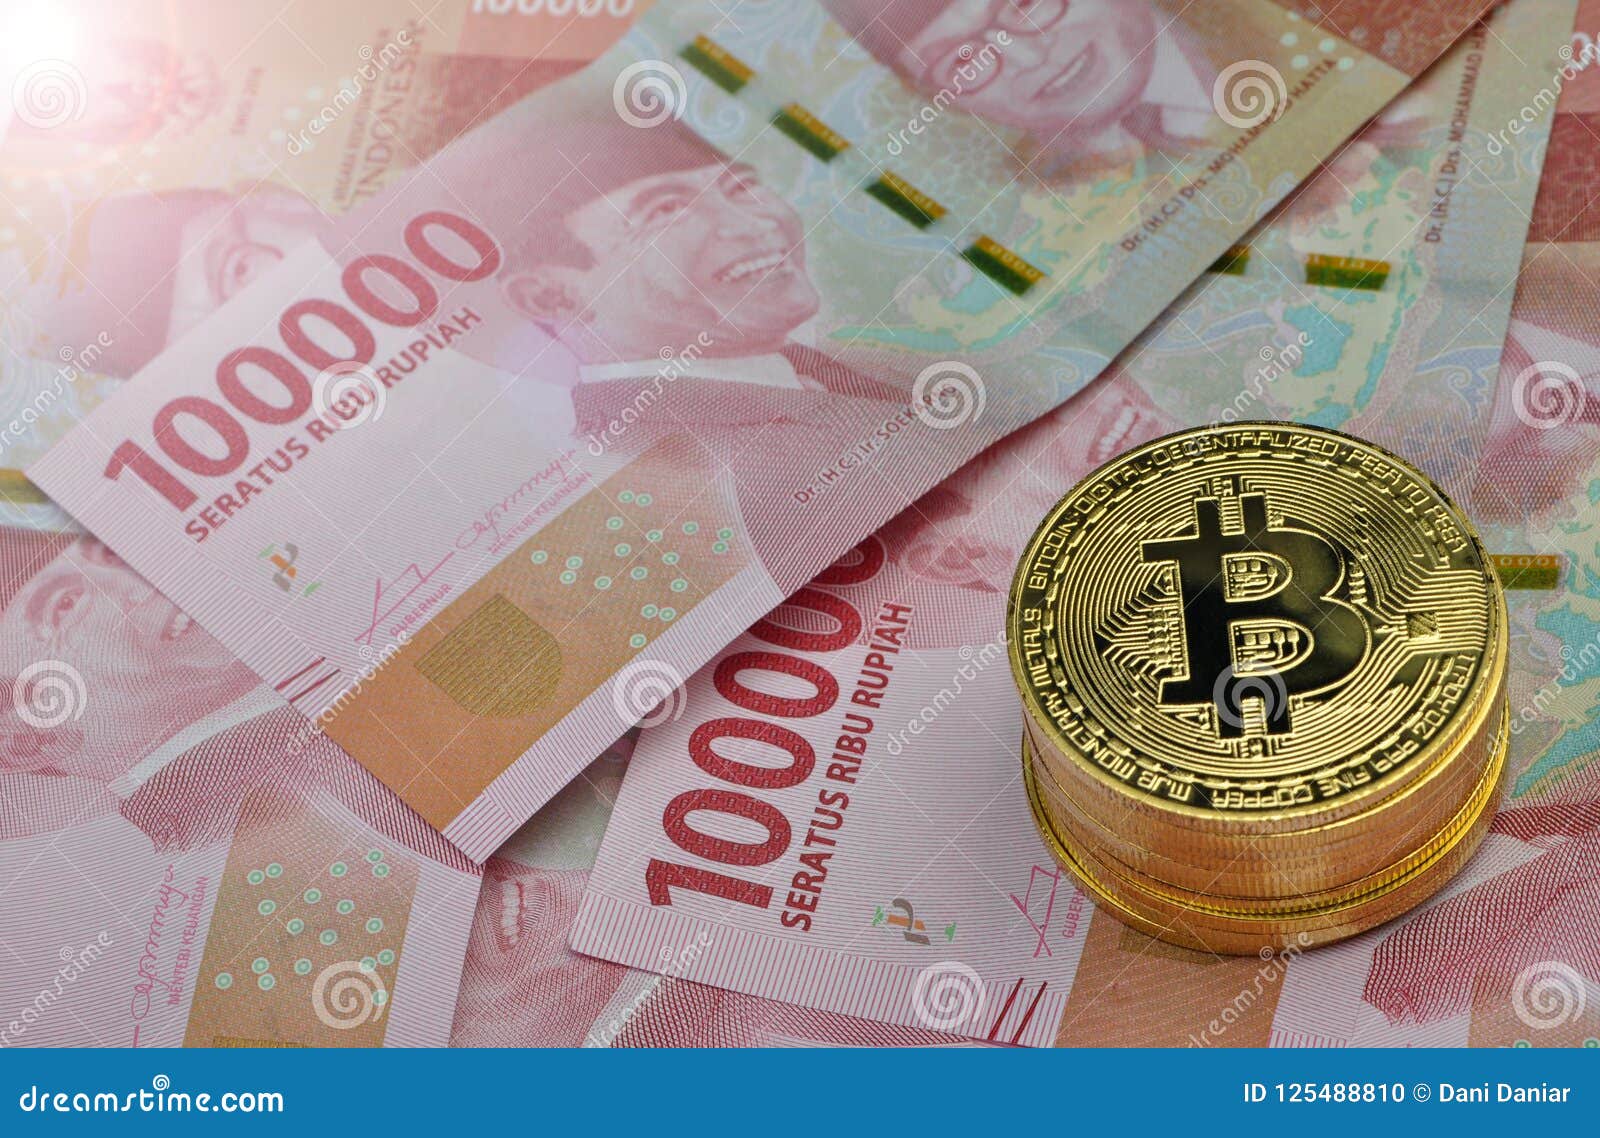 Best Crypto Exchanges in Indonesia | CoinMarketCap